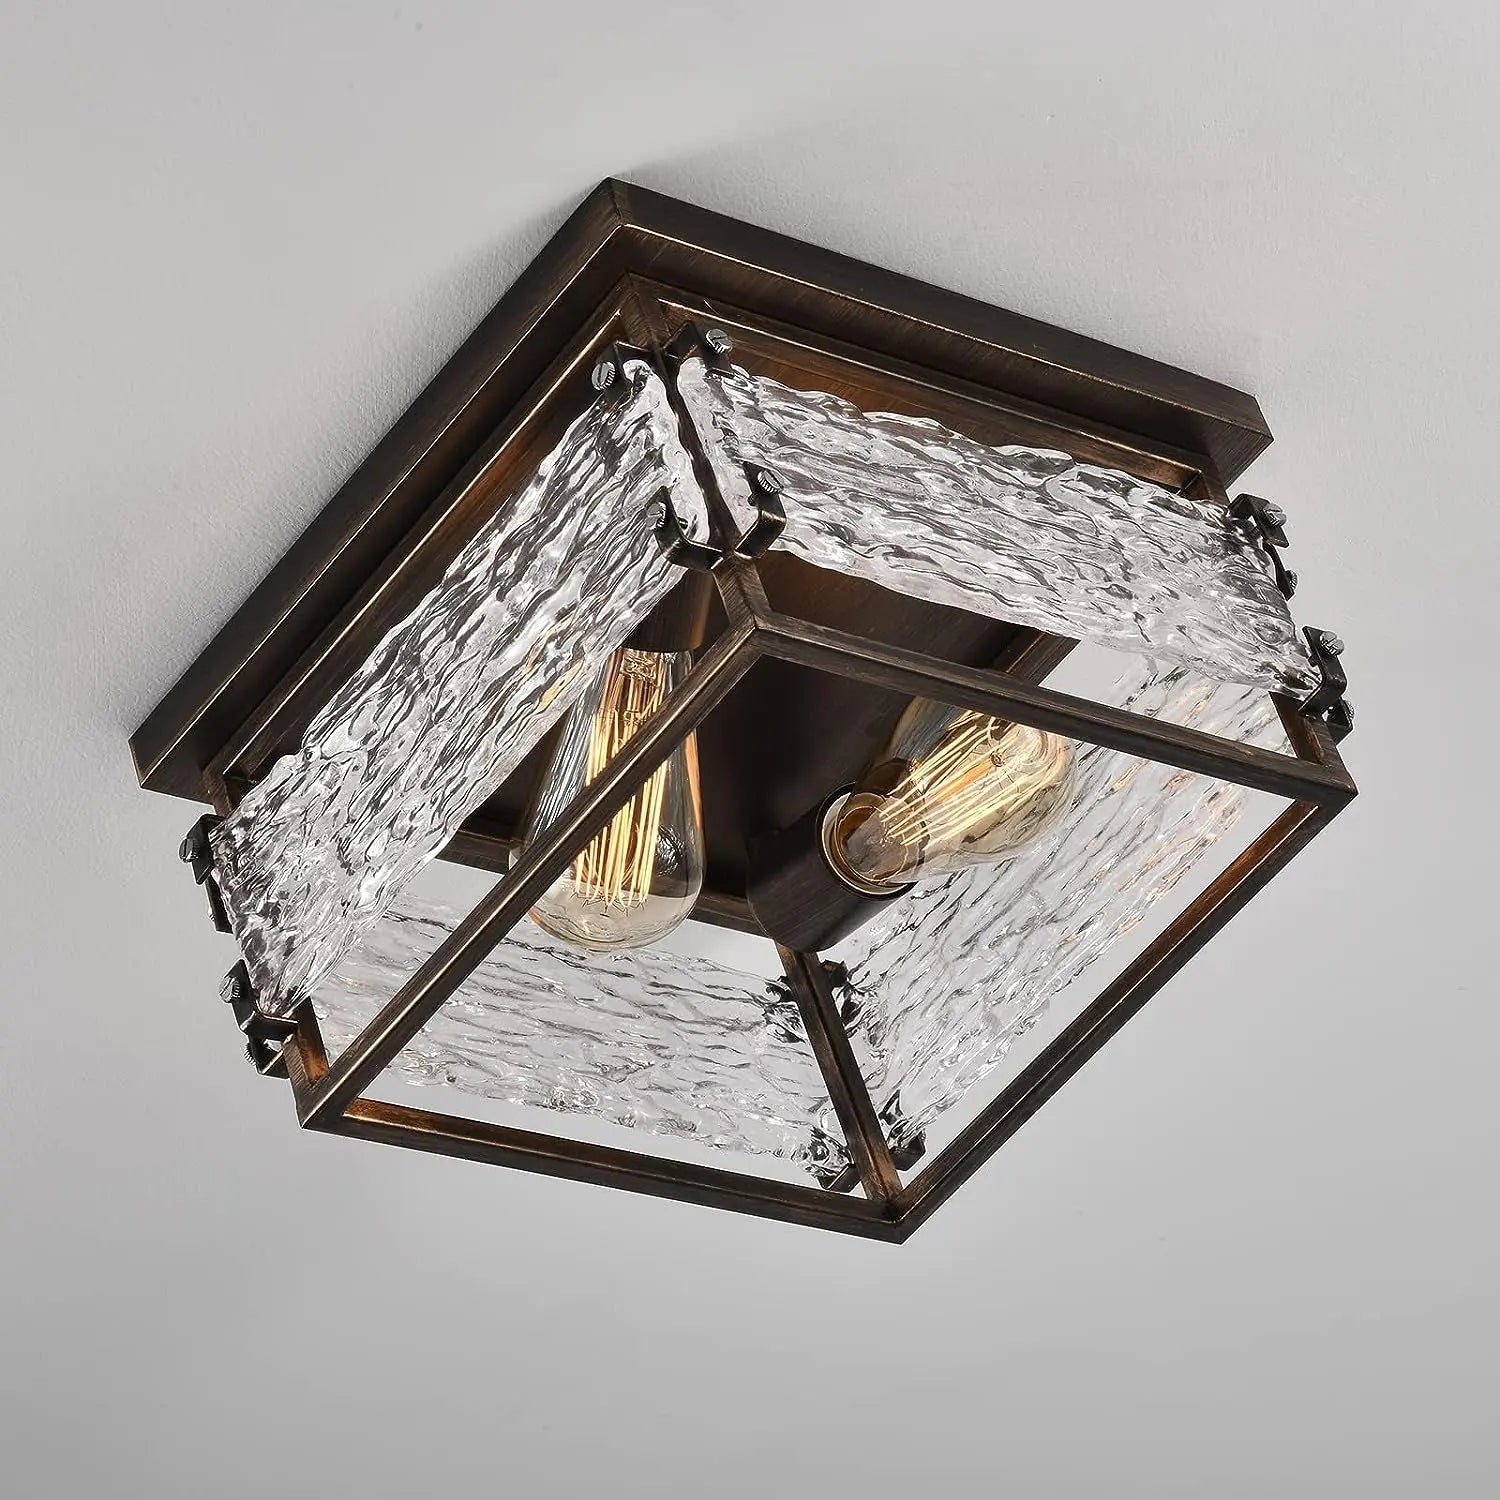 Flush Mount Ceiling Light Fixture, 2-Light Industrial Light Fixtures Brass Crystal Glass Seed Ceiling Lights for Farmhouse,Kitchen,Bedroom,Bathroom,Etc